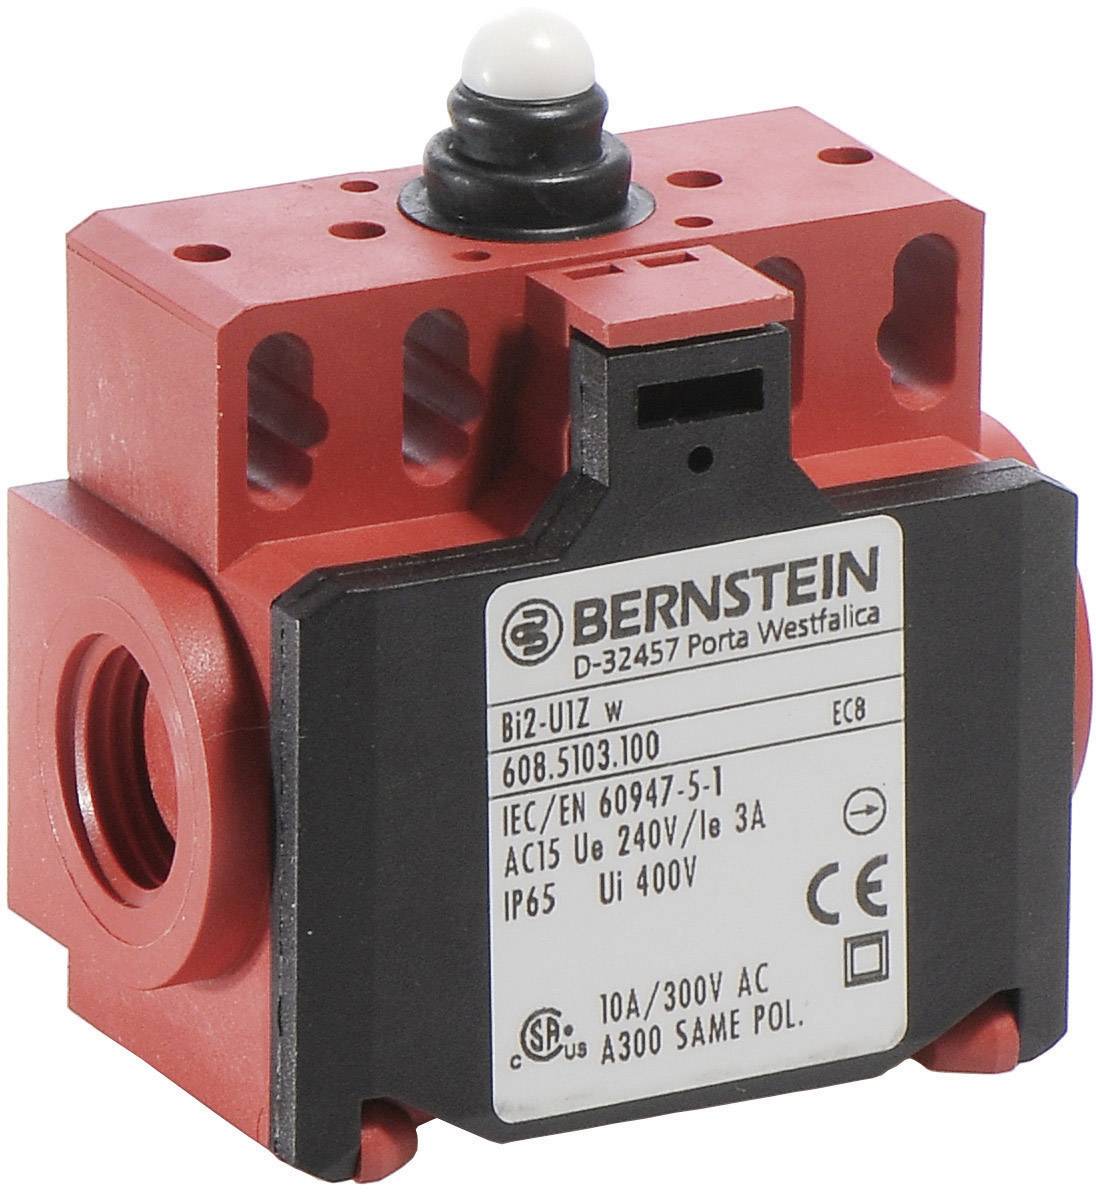 BERNSTEIN AG Endschalter 240 V/AC 10 A Stößel tastend BI2-SU1Z W IP65 1 St. (6085153107)